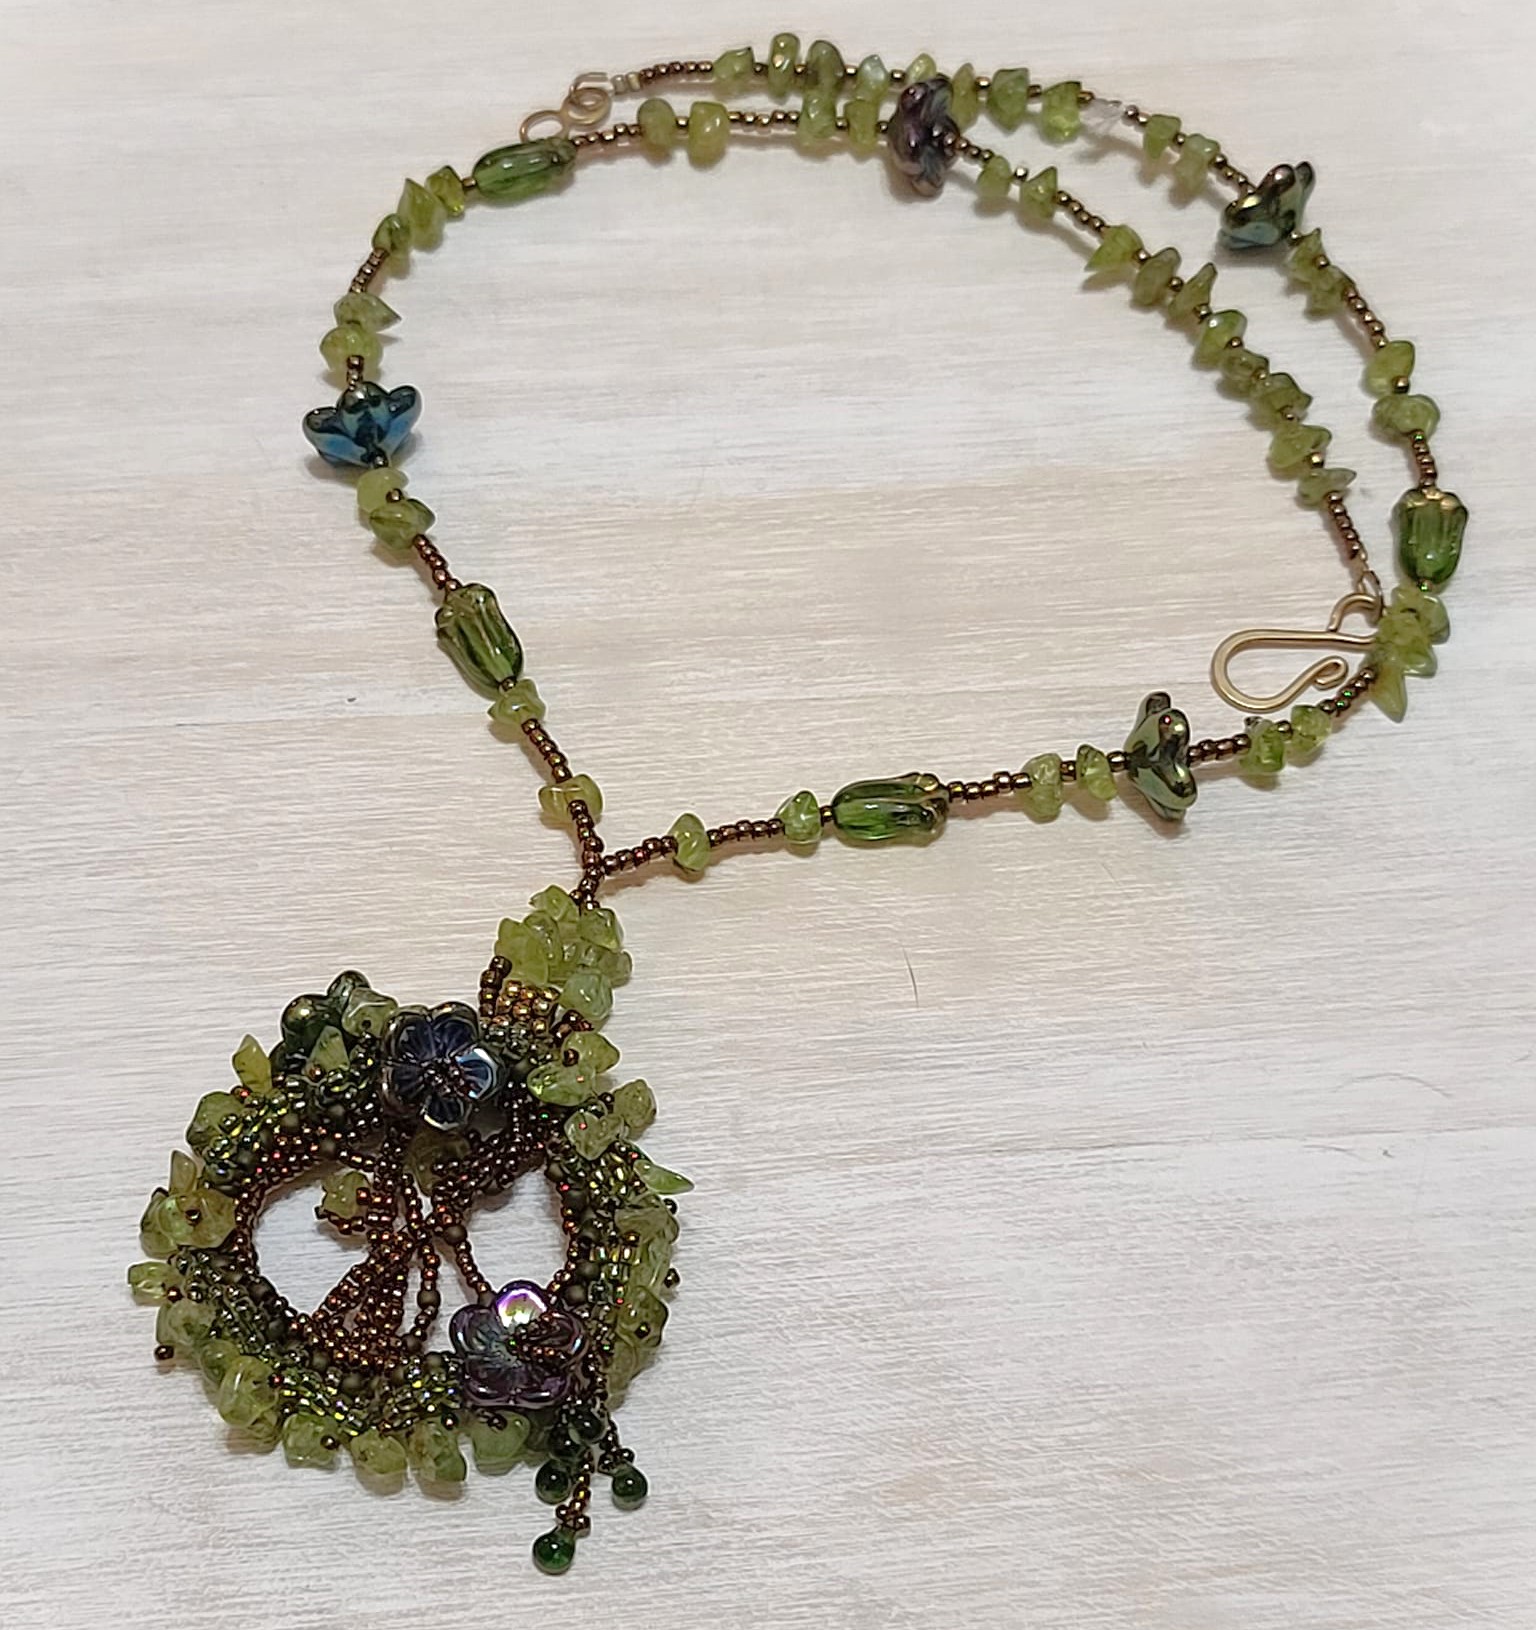 Tree of life pendant necklace, peridot gemstones, miyuki glass